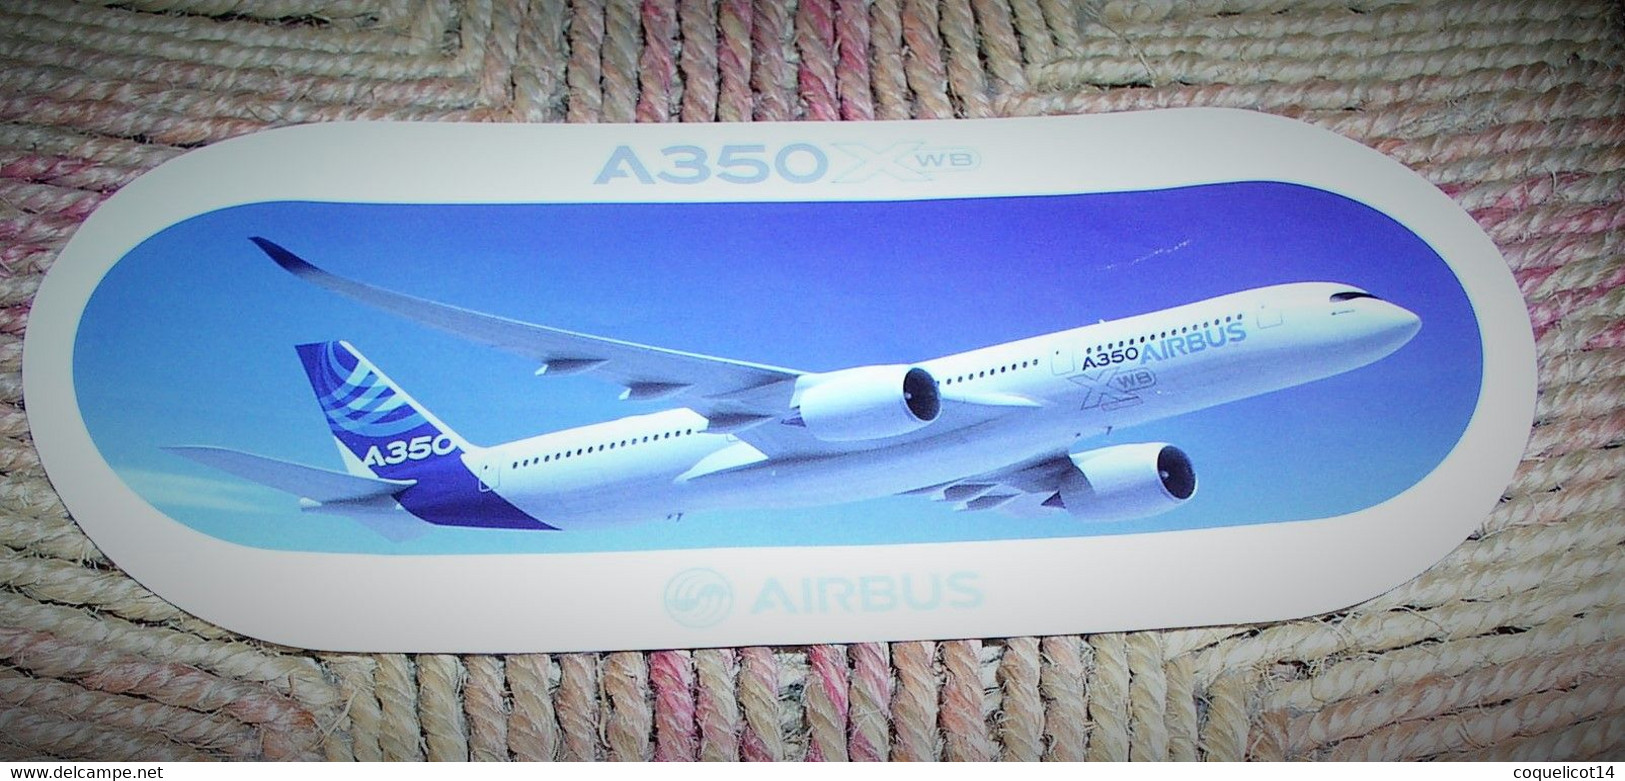 Autocollant Airbus A350 XWB - Autocollants